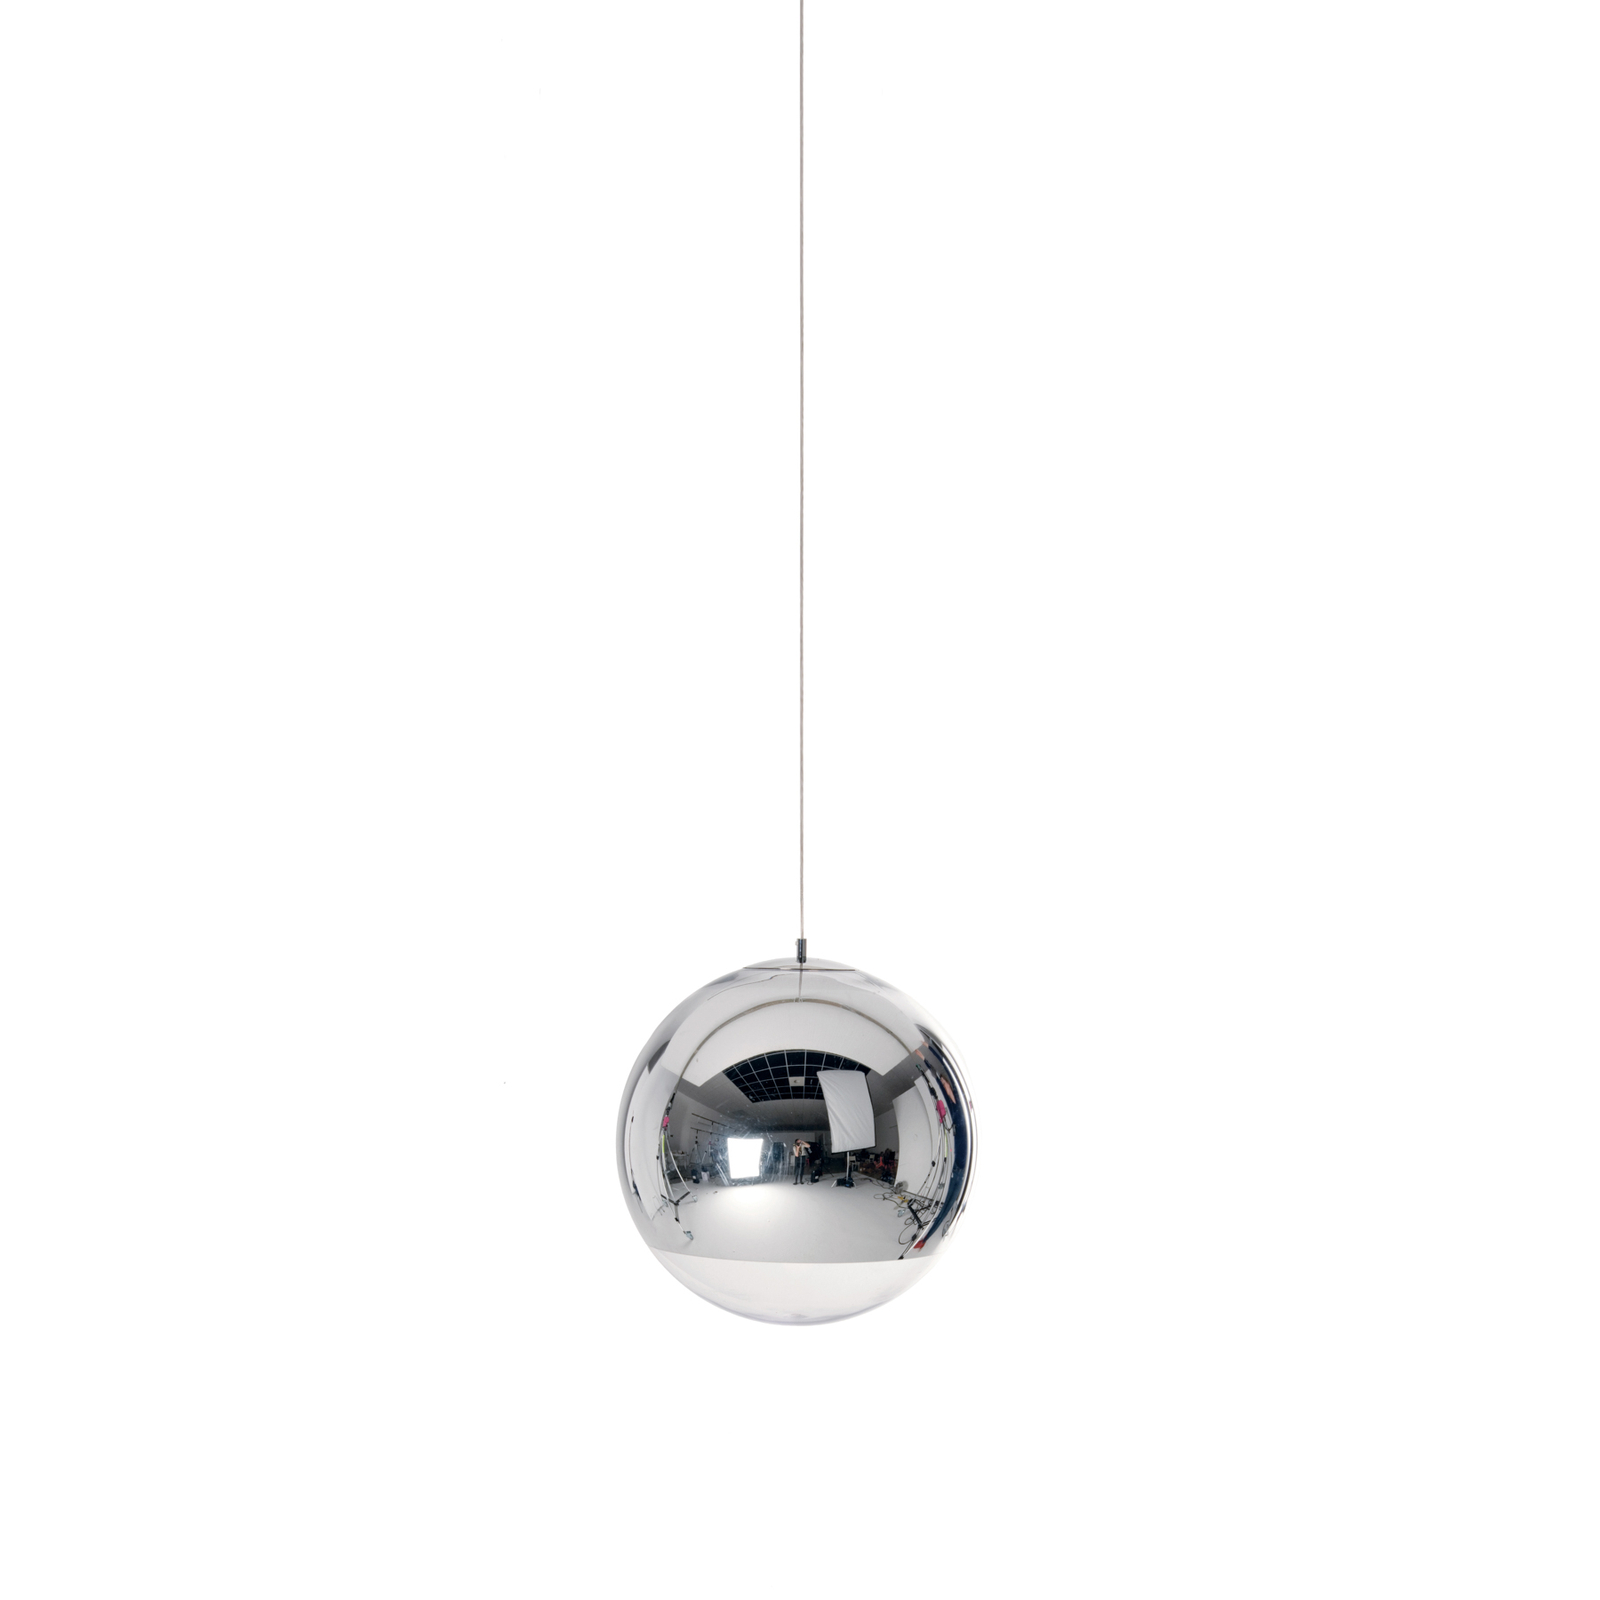 Tom Dixon Mirror Ball LED hanglamp Ø 50 cm chroom